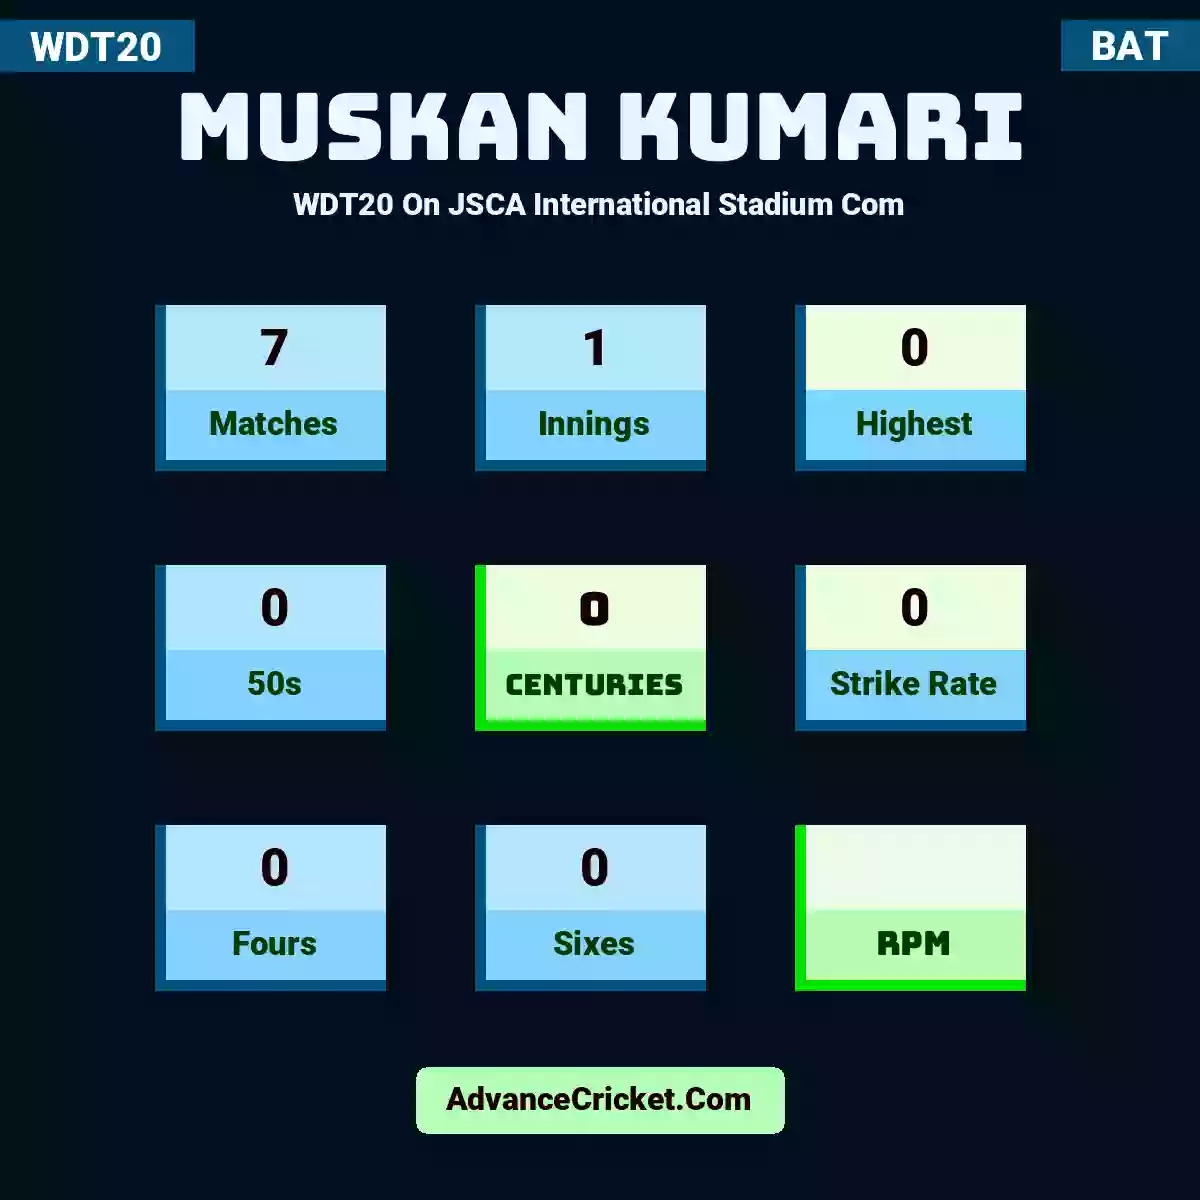 Muskan Kumari WDT20  On JSCA International Stadium Com, Muskan Kumari played 7 matches, scored 0 runs as highest, 0 half-centuries, and 0 centuries, with a strike rate of 0. M.Kumari hit 0 fours and 0 sixes.